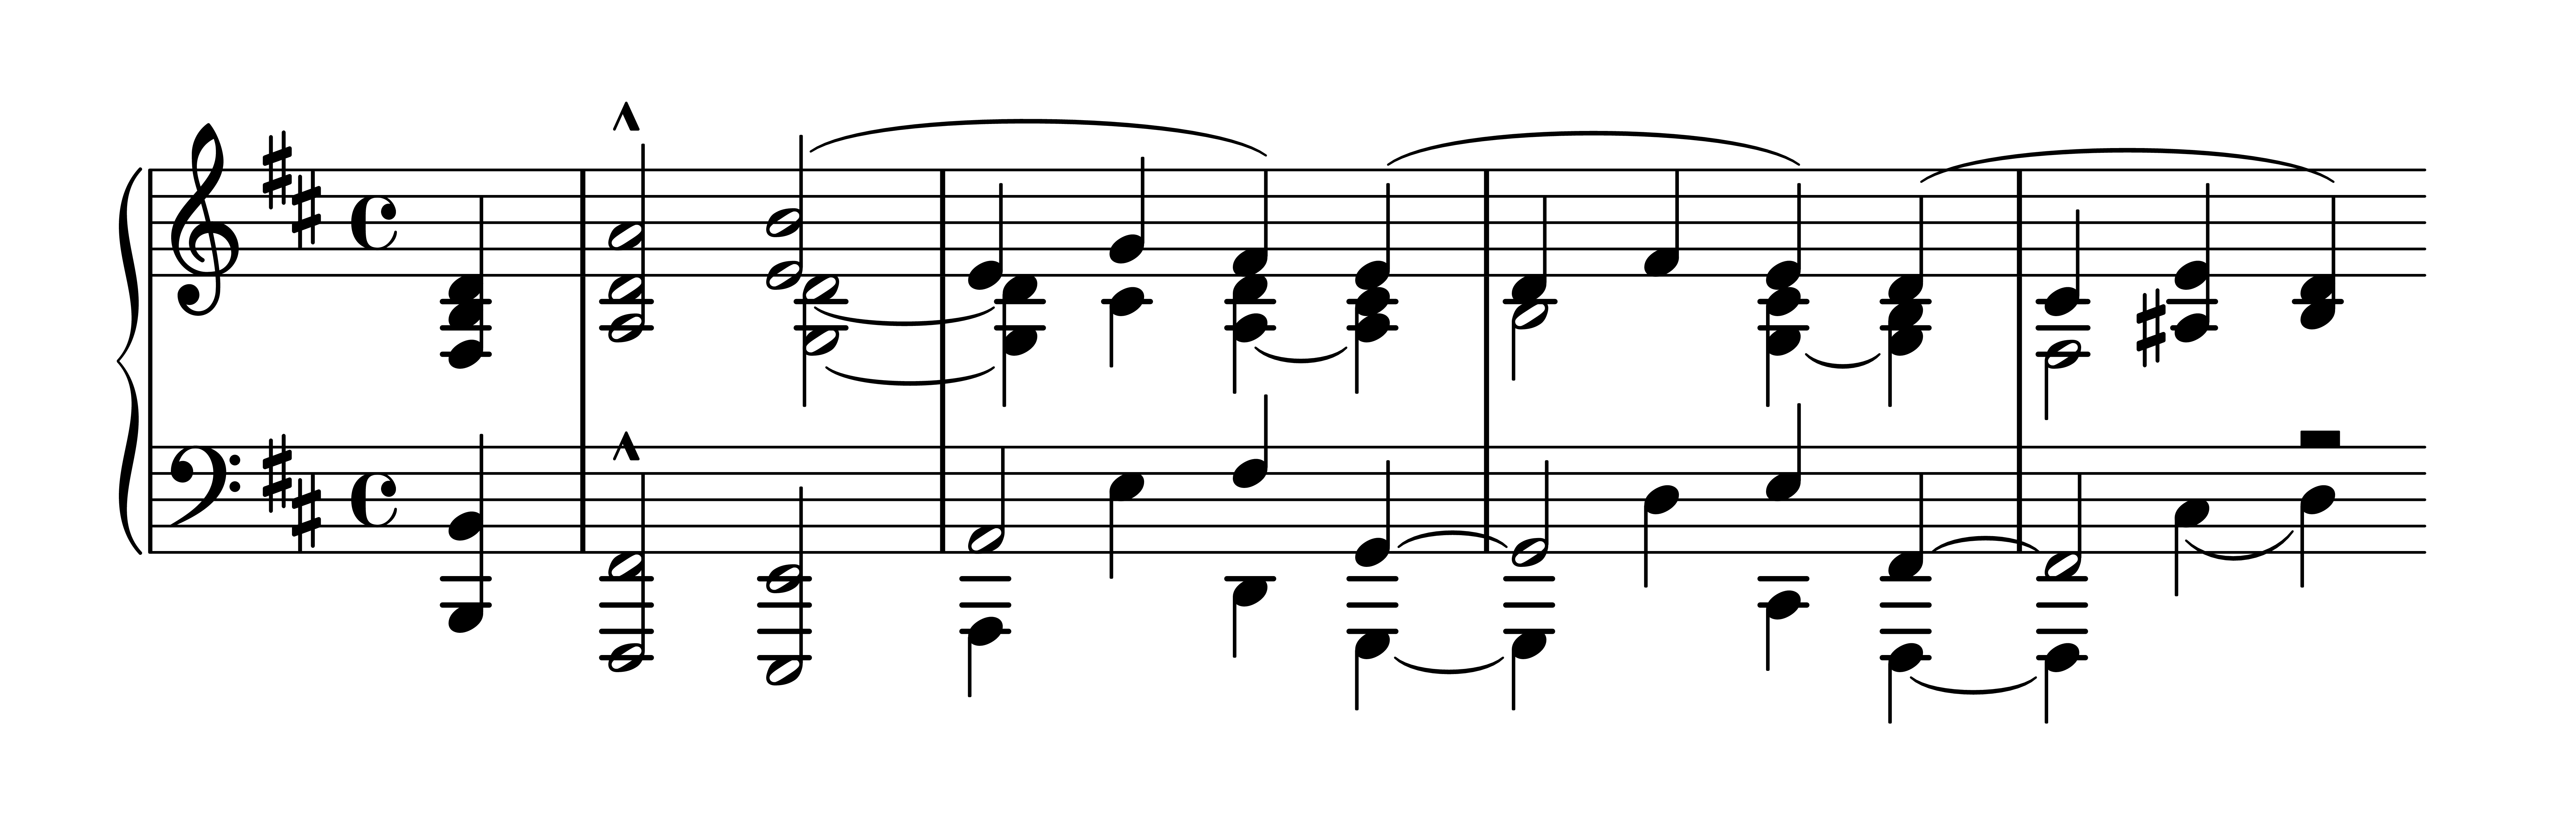 Es. 4: Robert Schumann, op. 133 n. 1, bb. 4-8 (con
              accompagnamento anticipato)